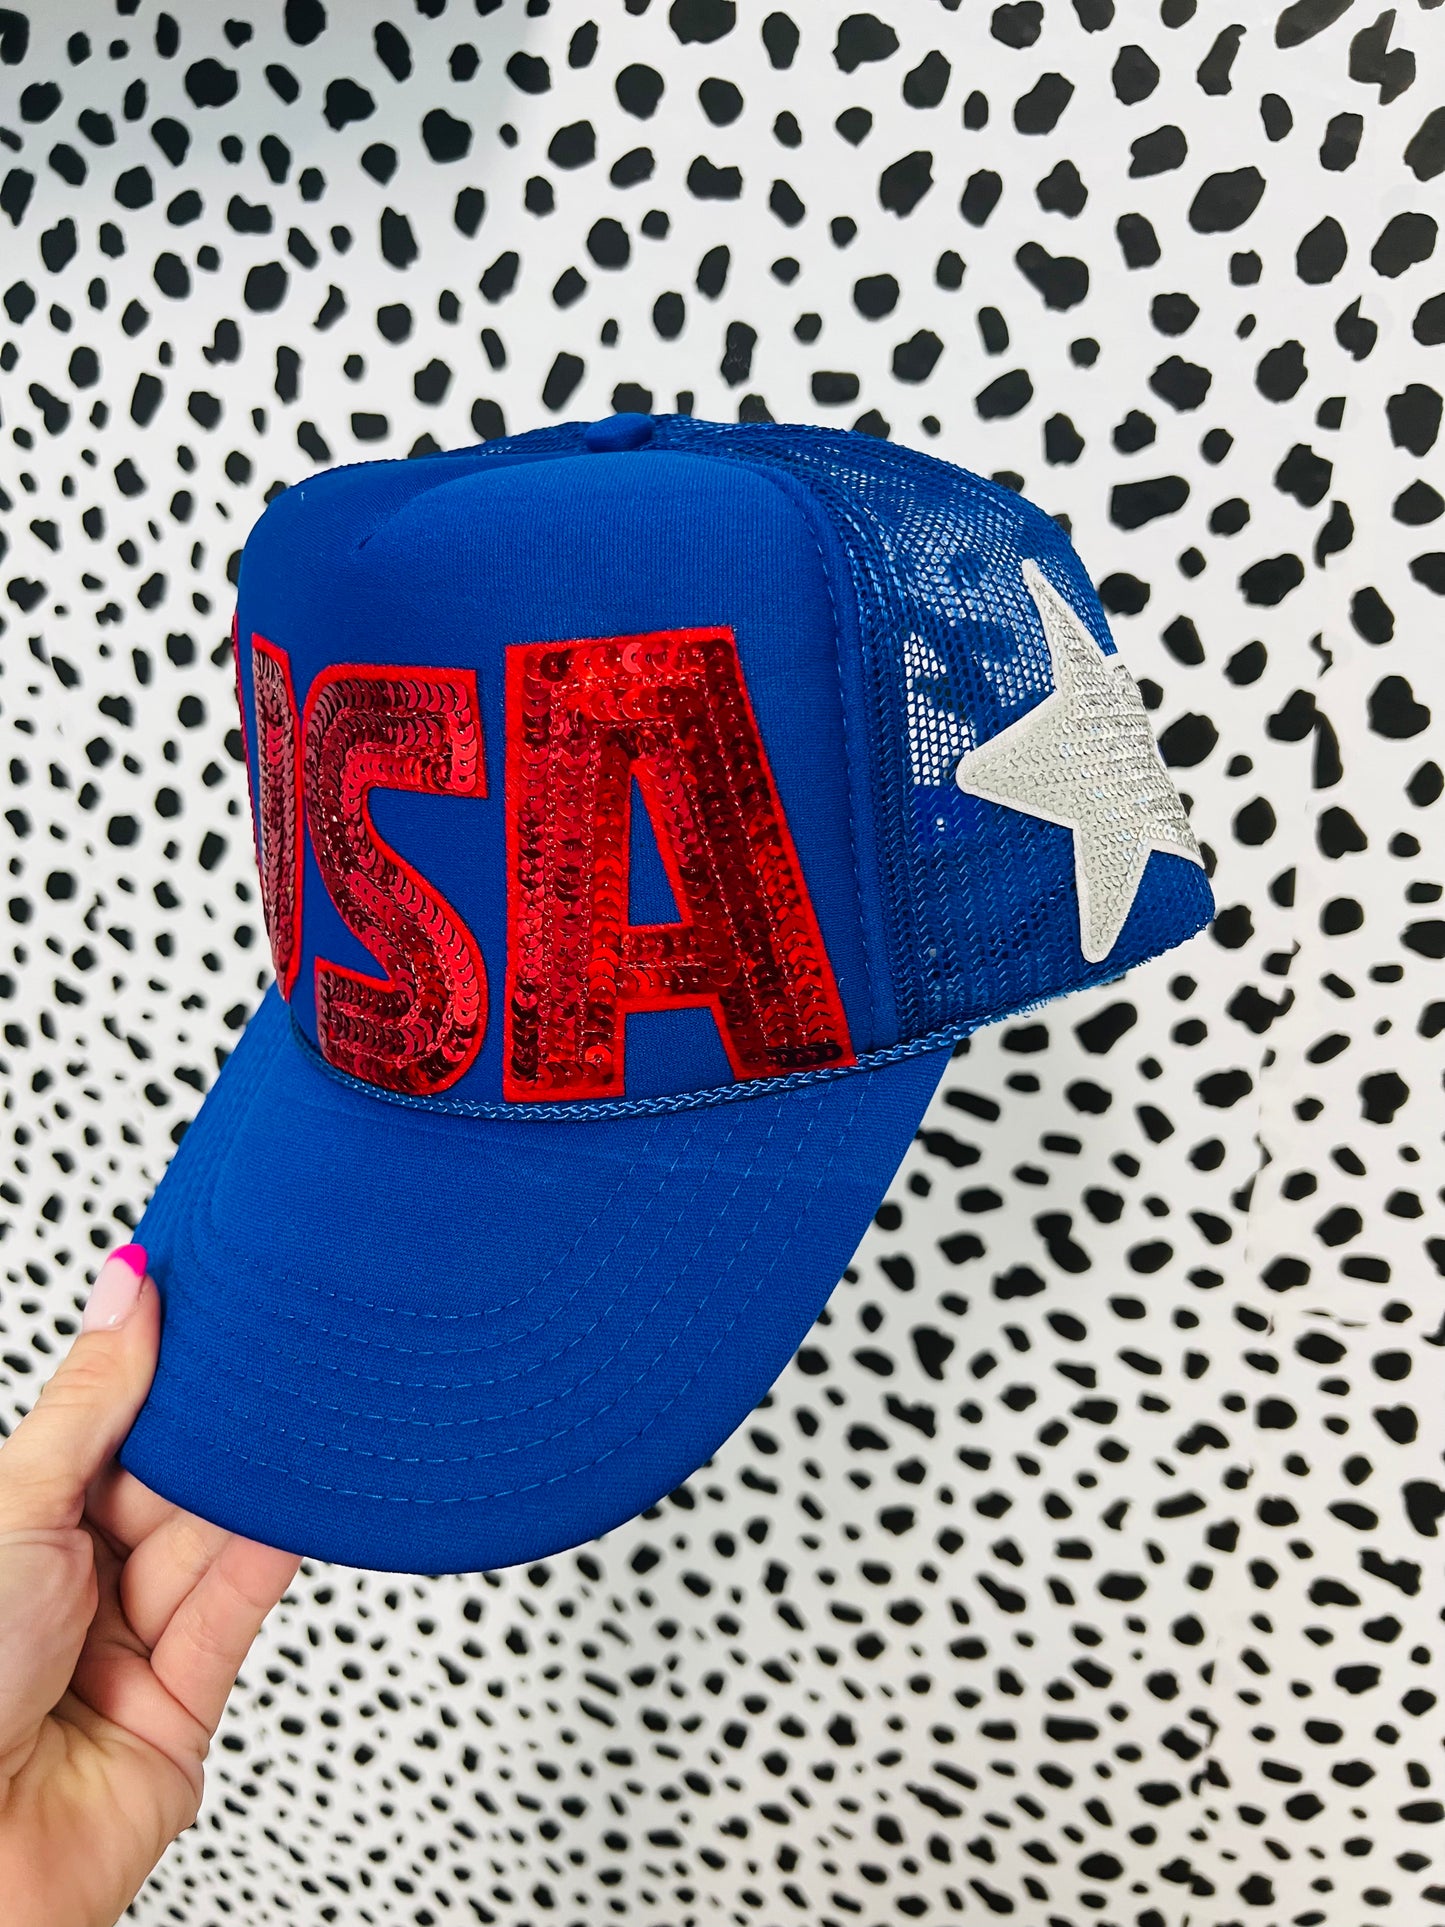 USA blue & red trucker hat